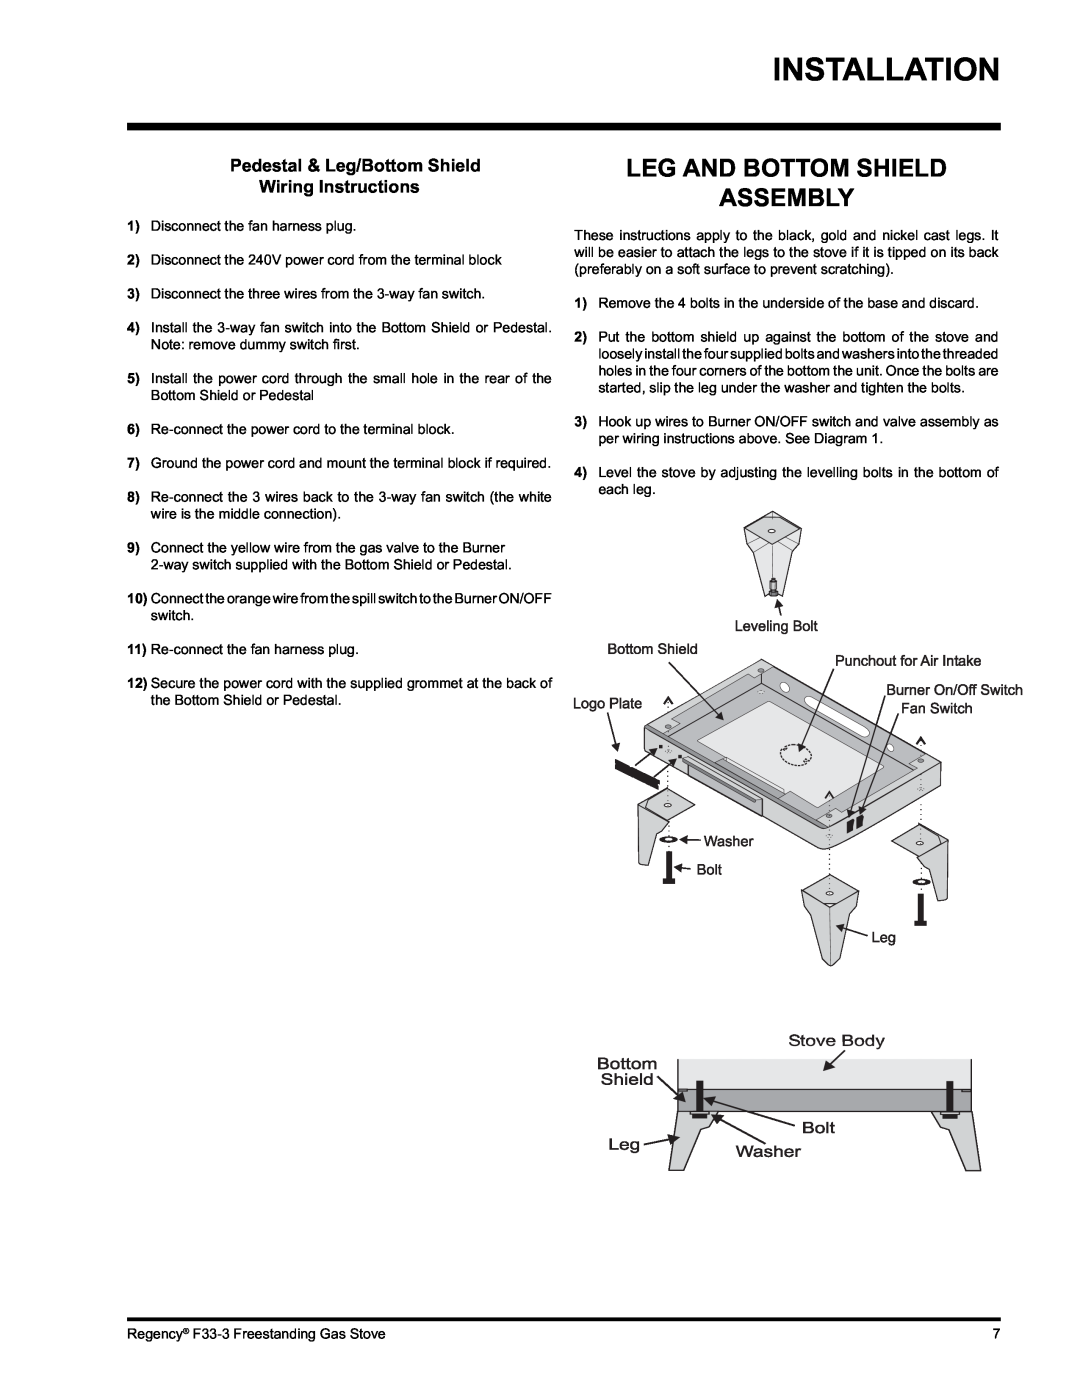 Regency Wraps F33 Leg And Bottom Shield Assembly, Installation, Pedestal & Leg/Bottom Shield Wiring Instructions 